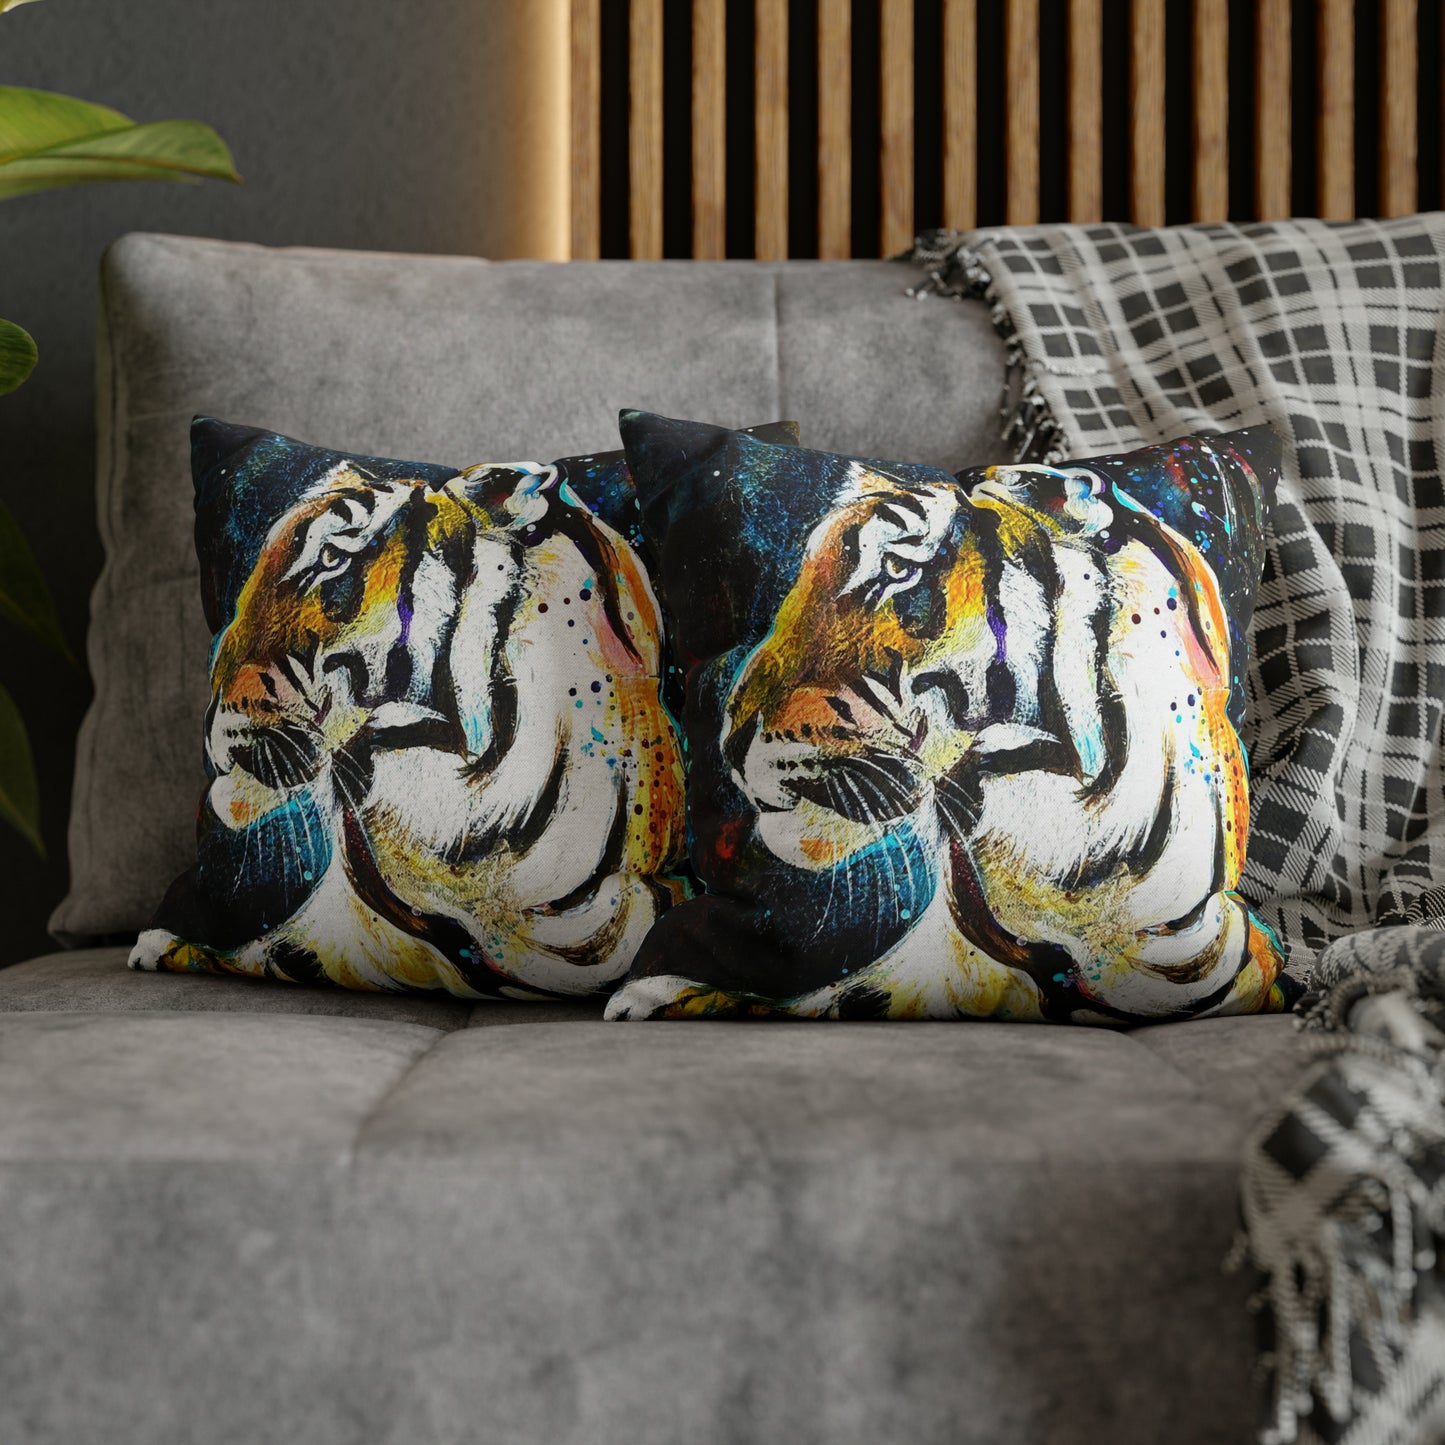 Tiger Square Pillow Case